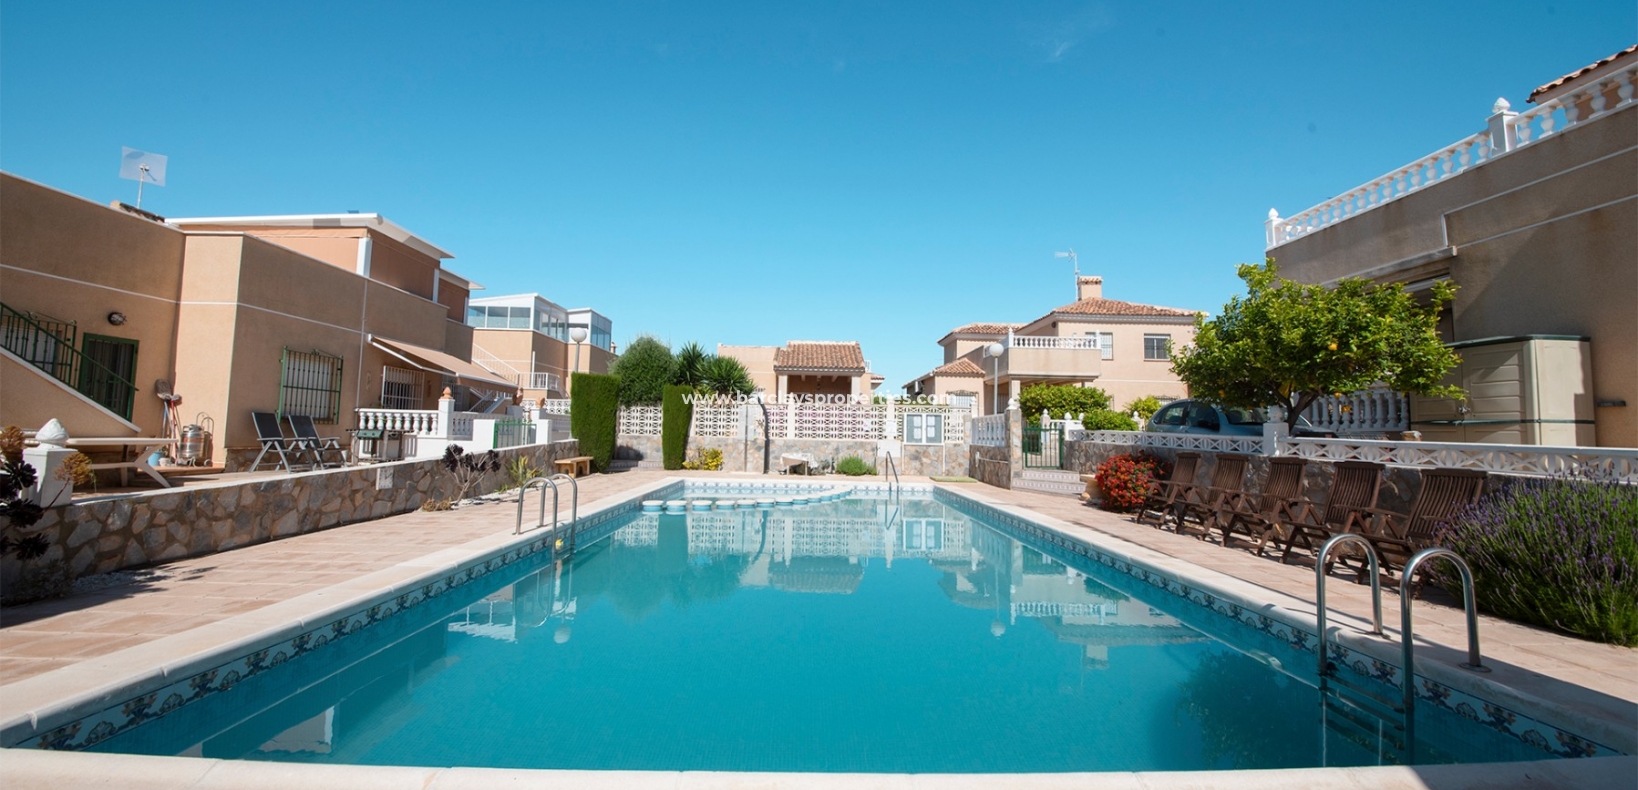 Communal Pool - Semi-Detached Property For Sale In La Marina Spain 